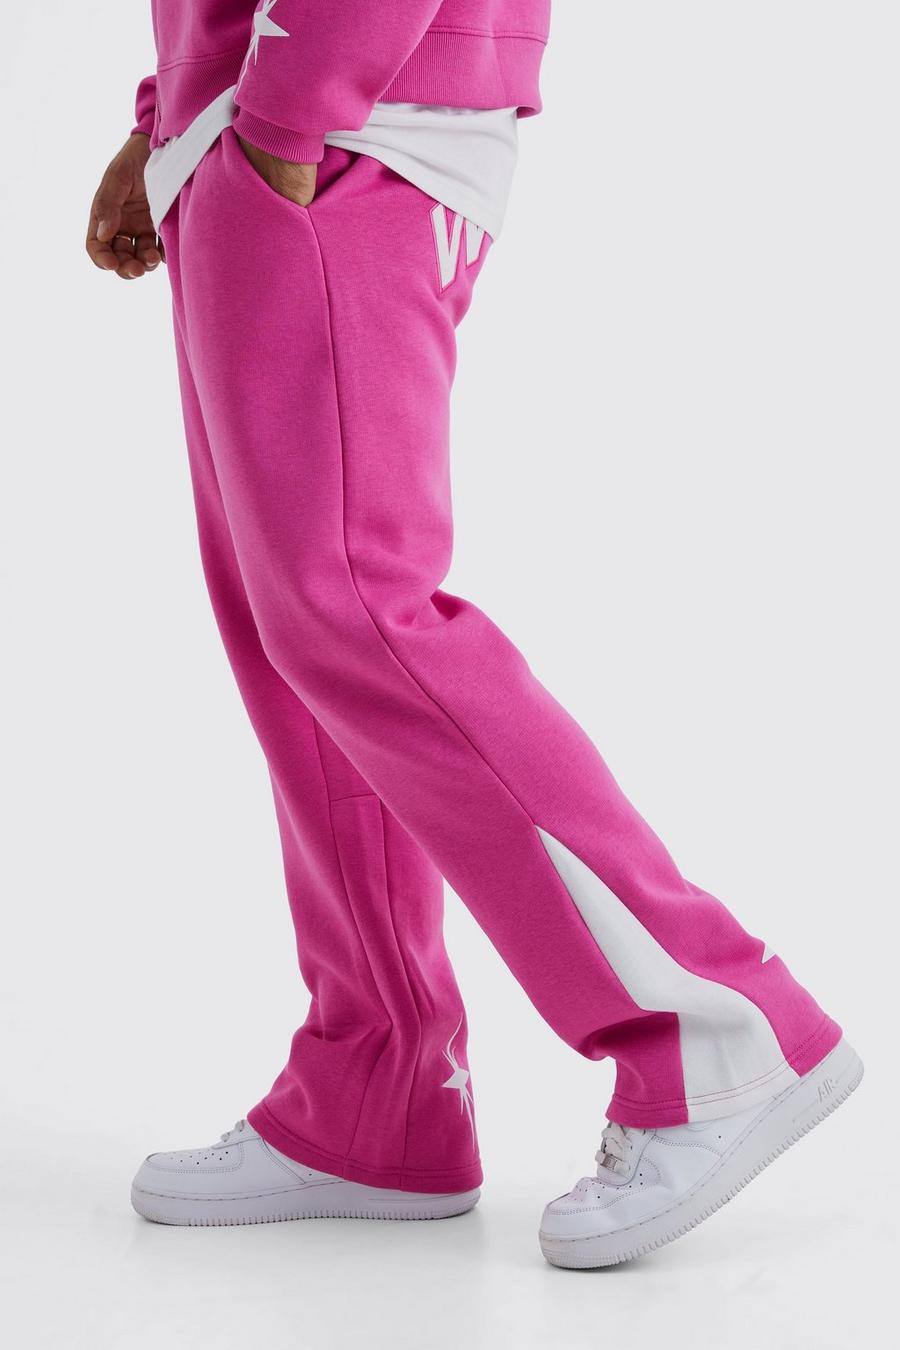 Pantaloni tuta Worldwide con inserti a stella, Pink rosa